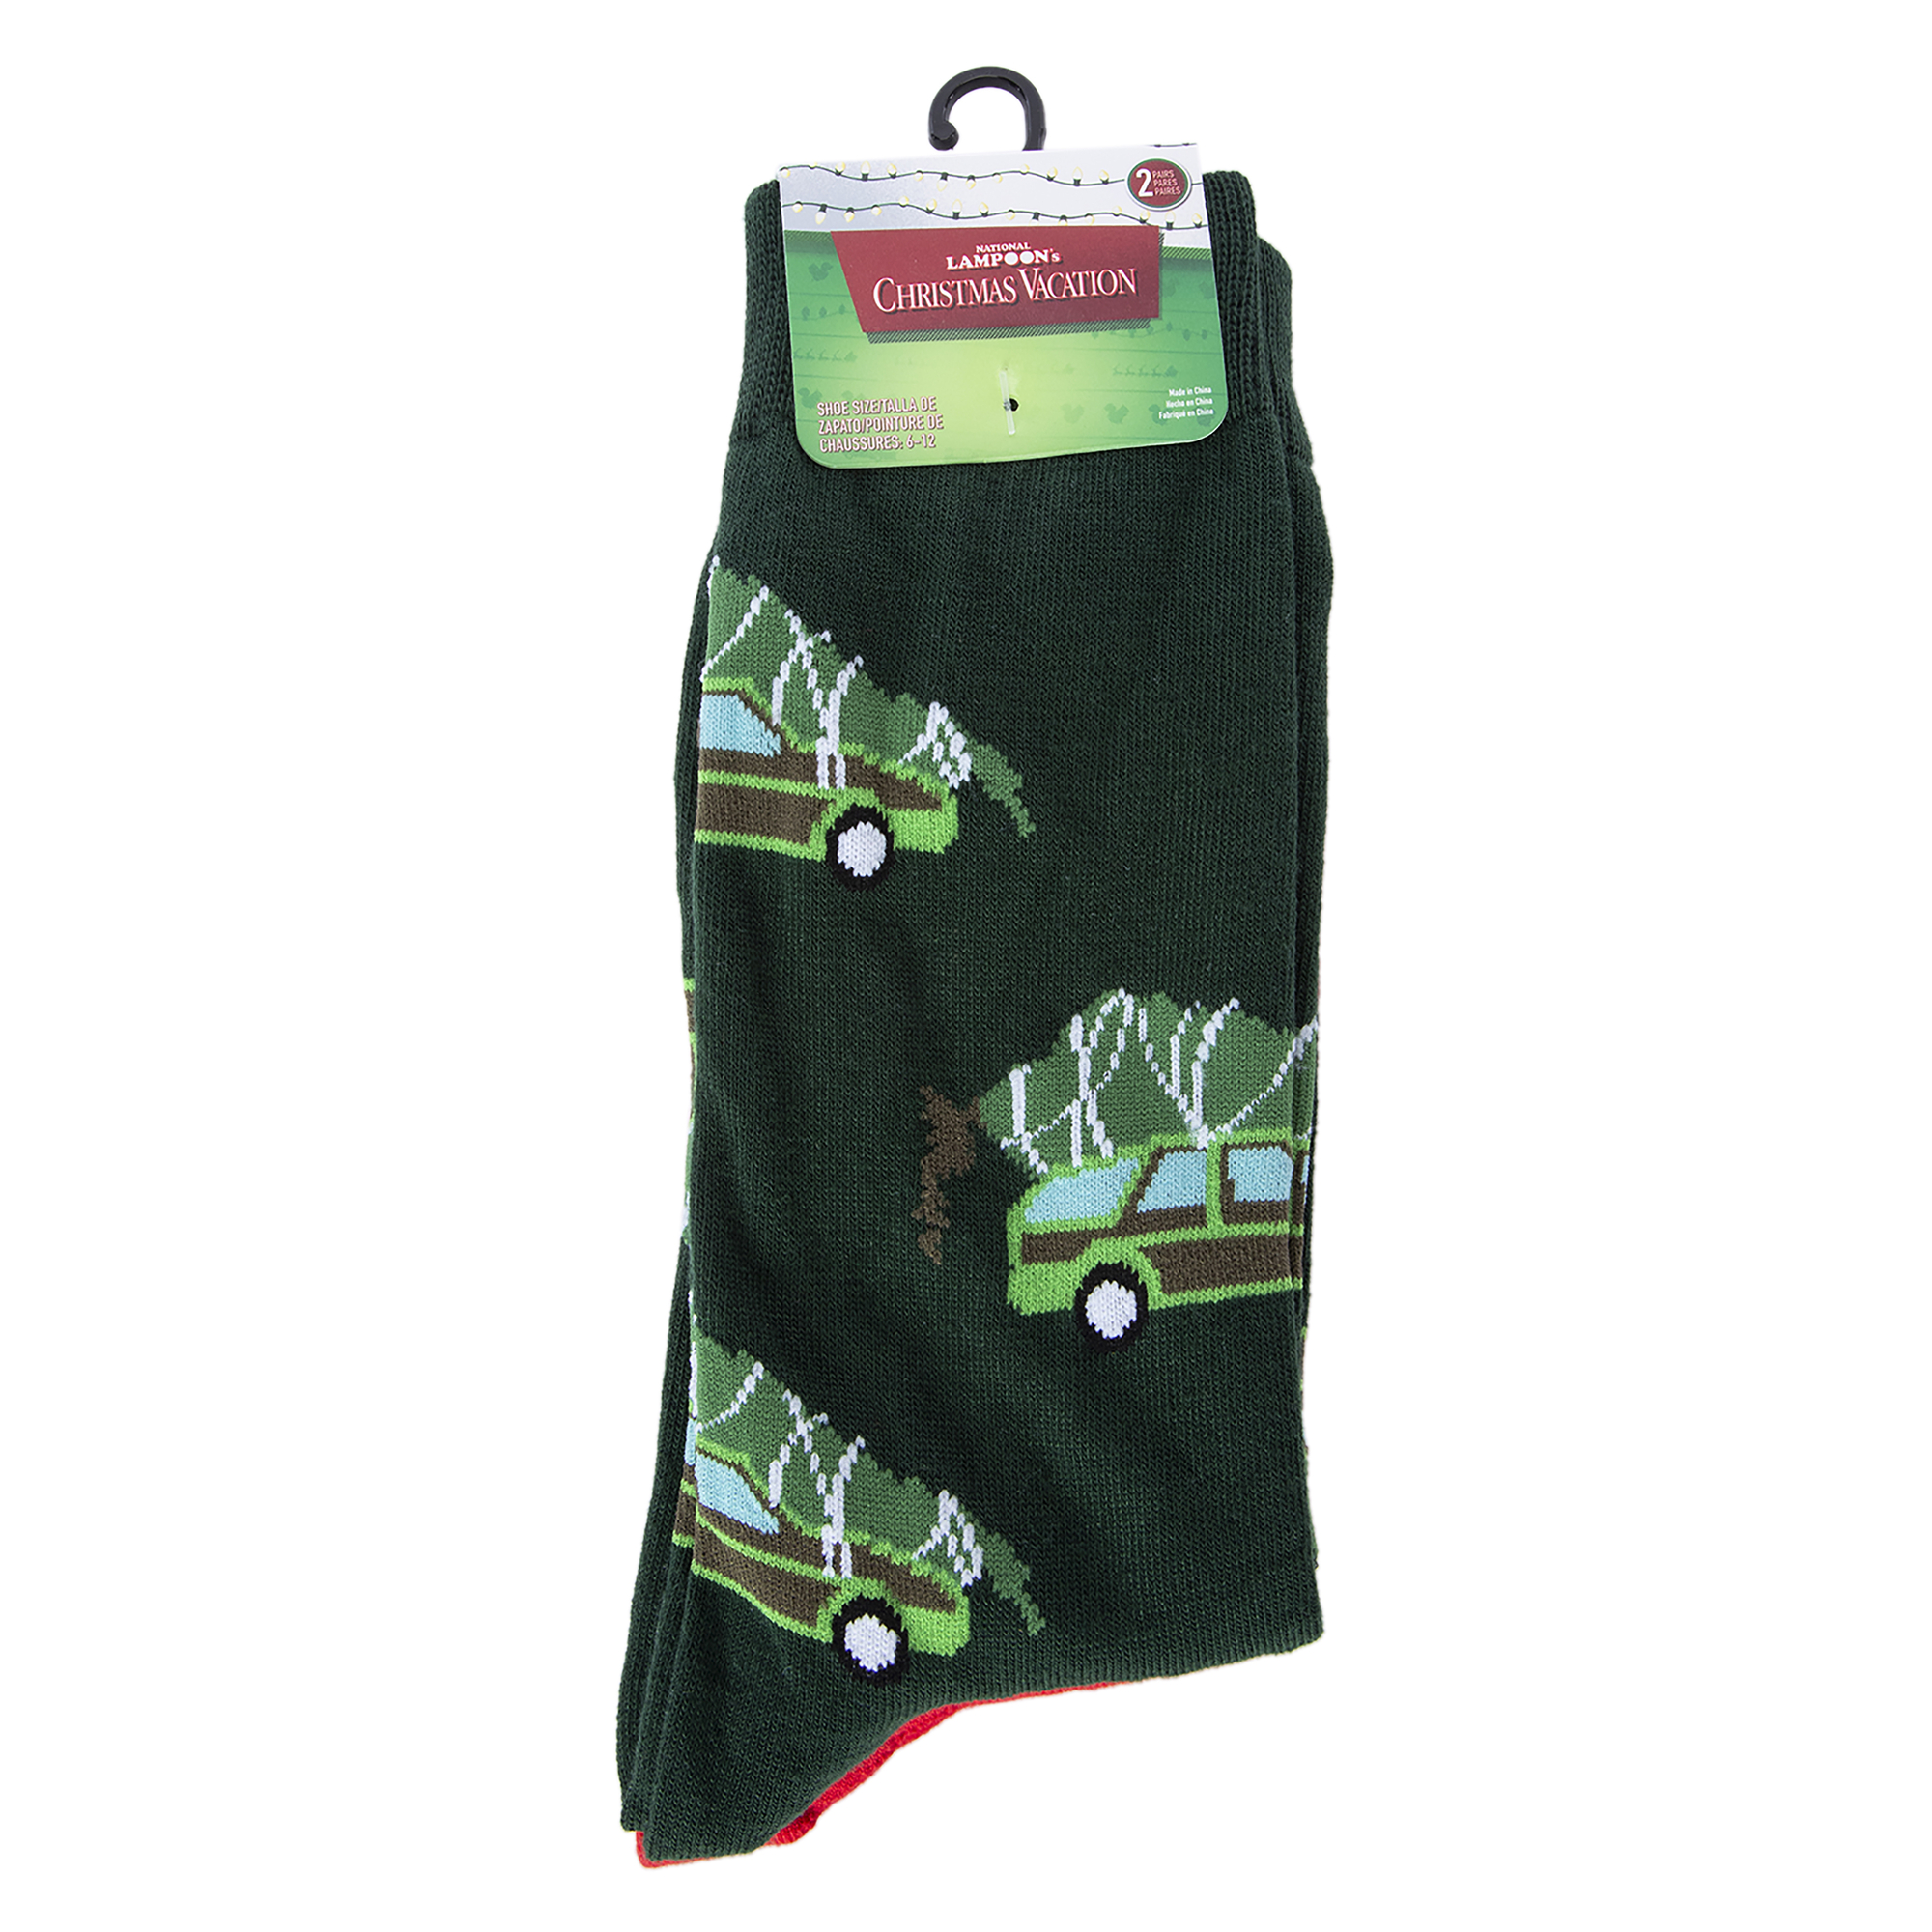 national lampoon's christmas vacation™ socks 2-pack